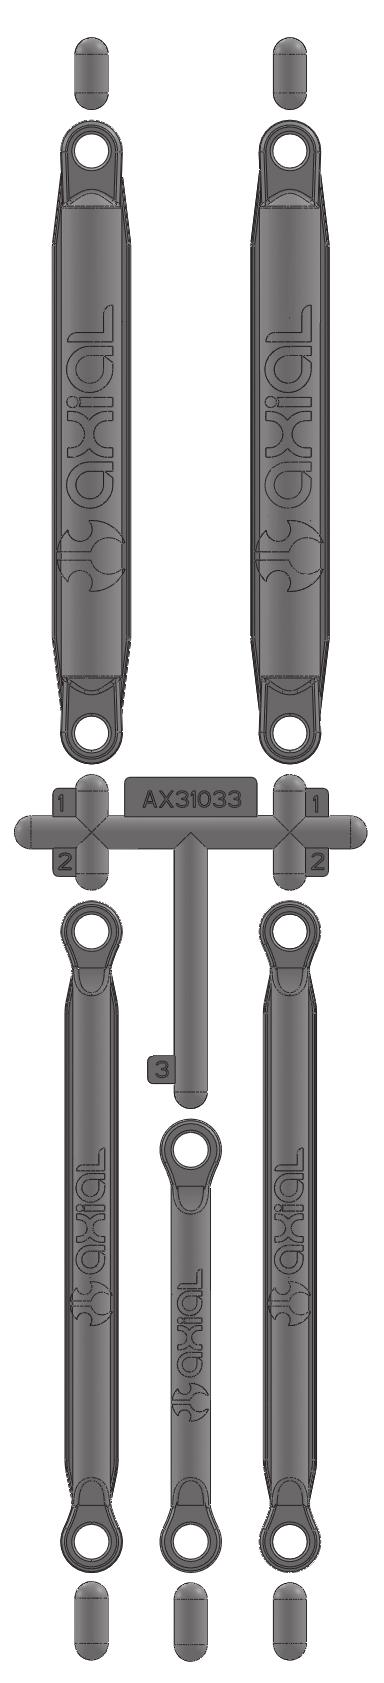 Links stiffeners AX31033